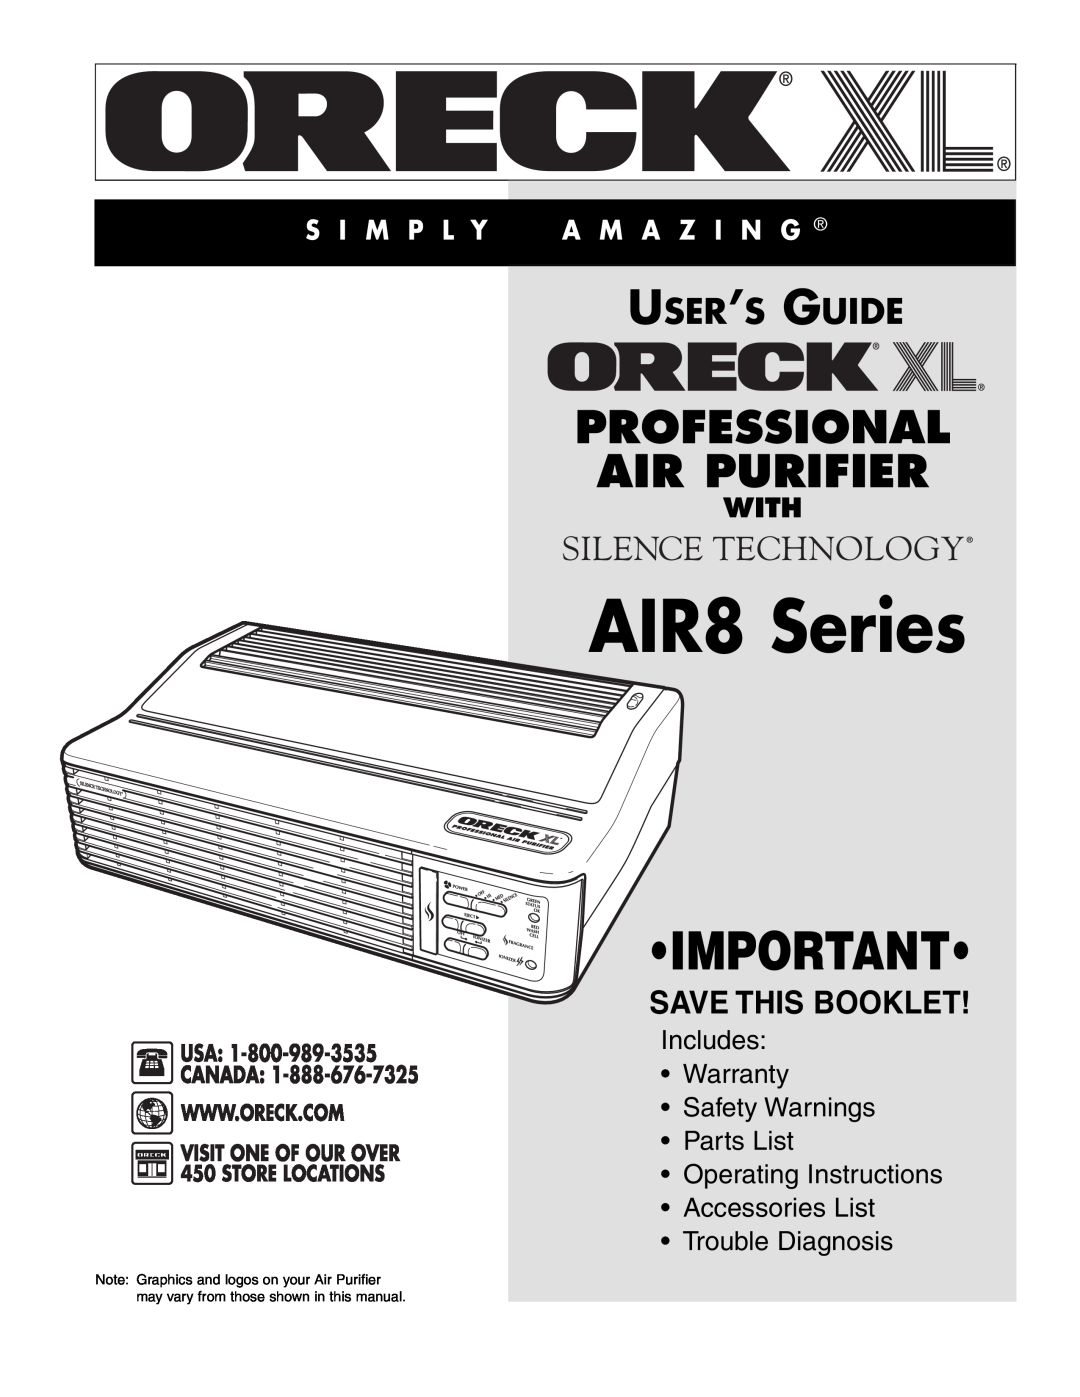 Oreck 3323-8889REVK AIR8 Series, Professional Air Purifier, User’S Guide, Save This Booklet, S I M P L Y A M A Z I N G 